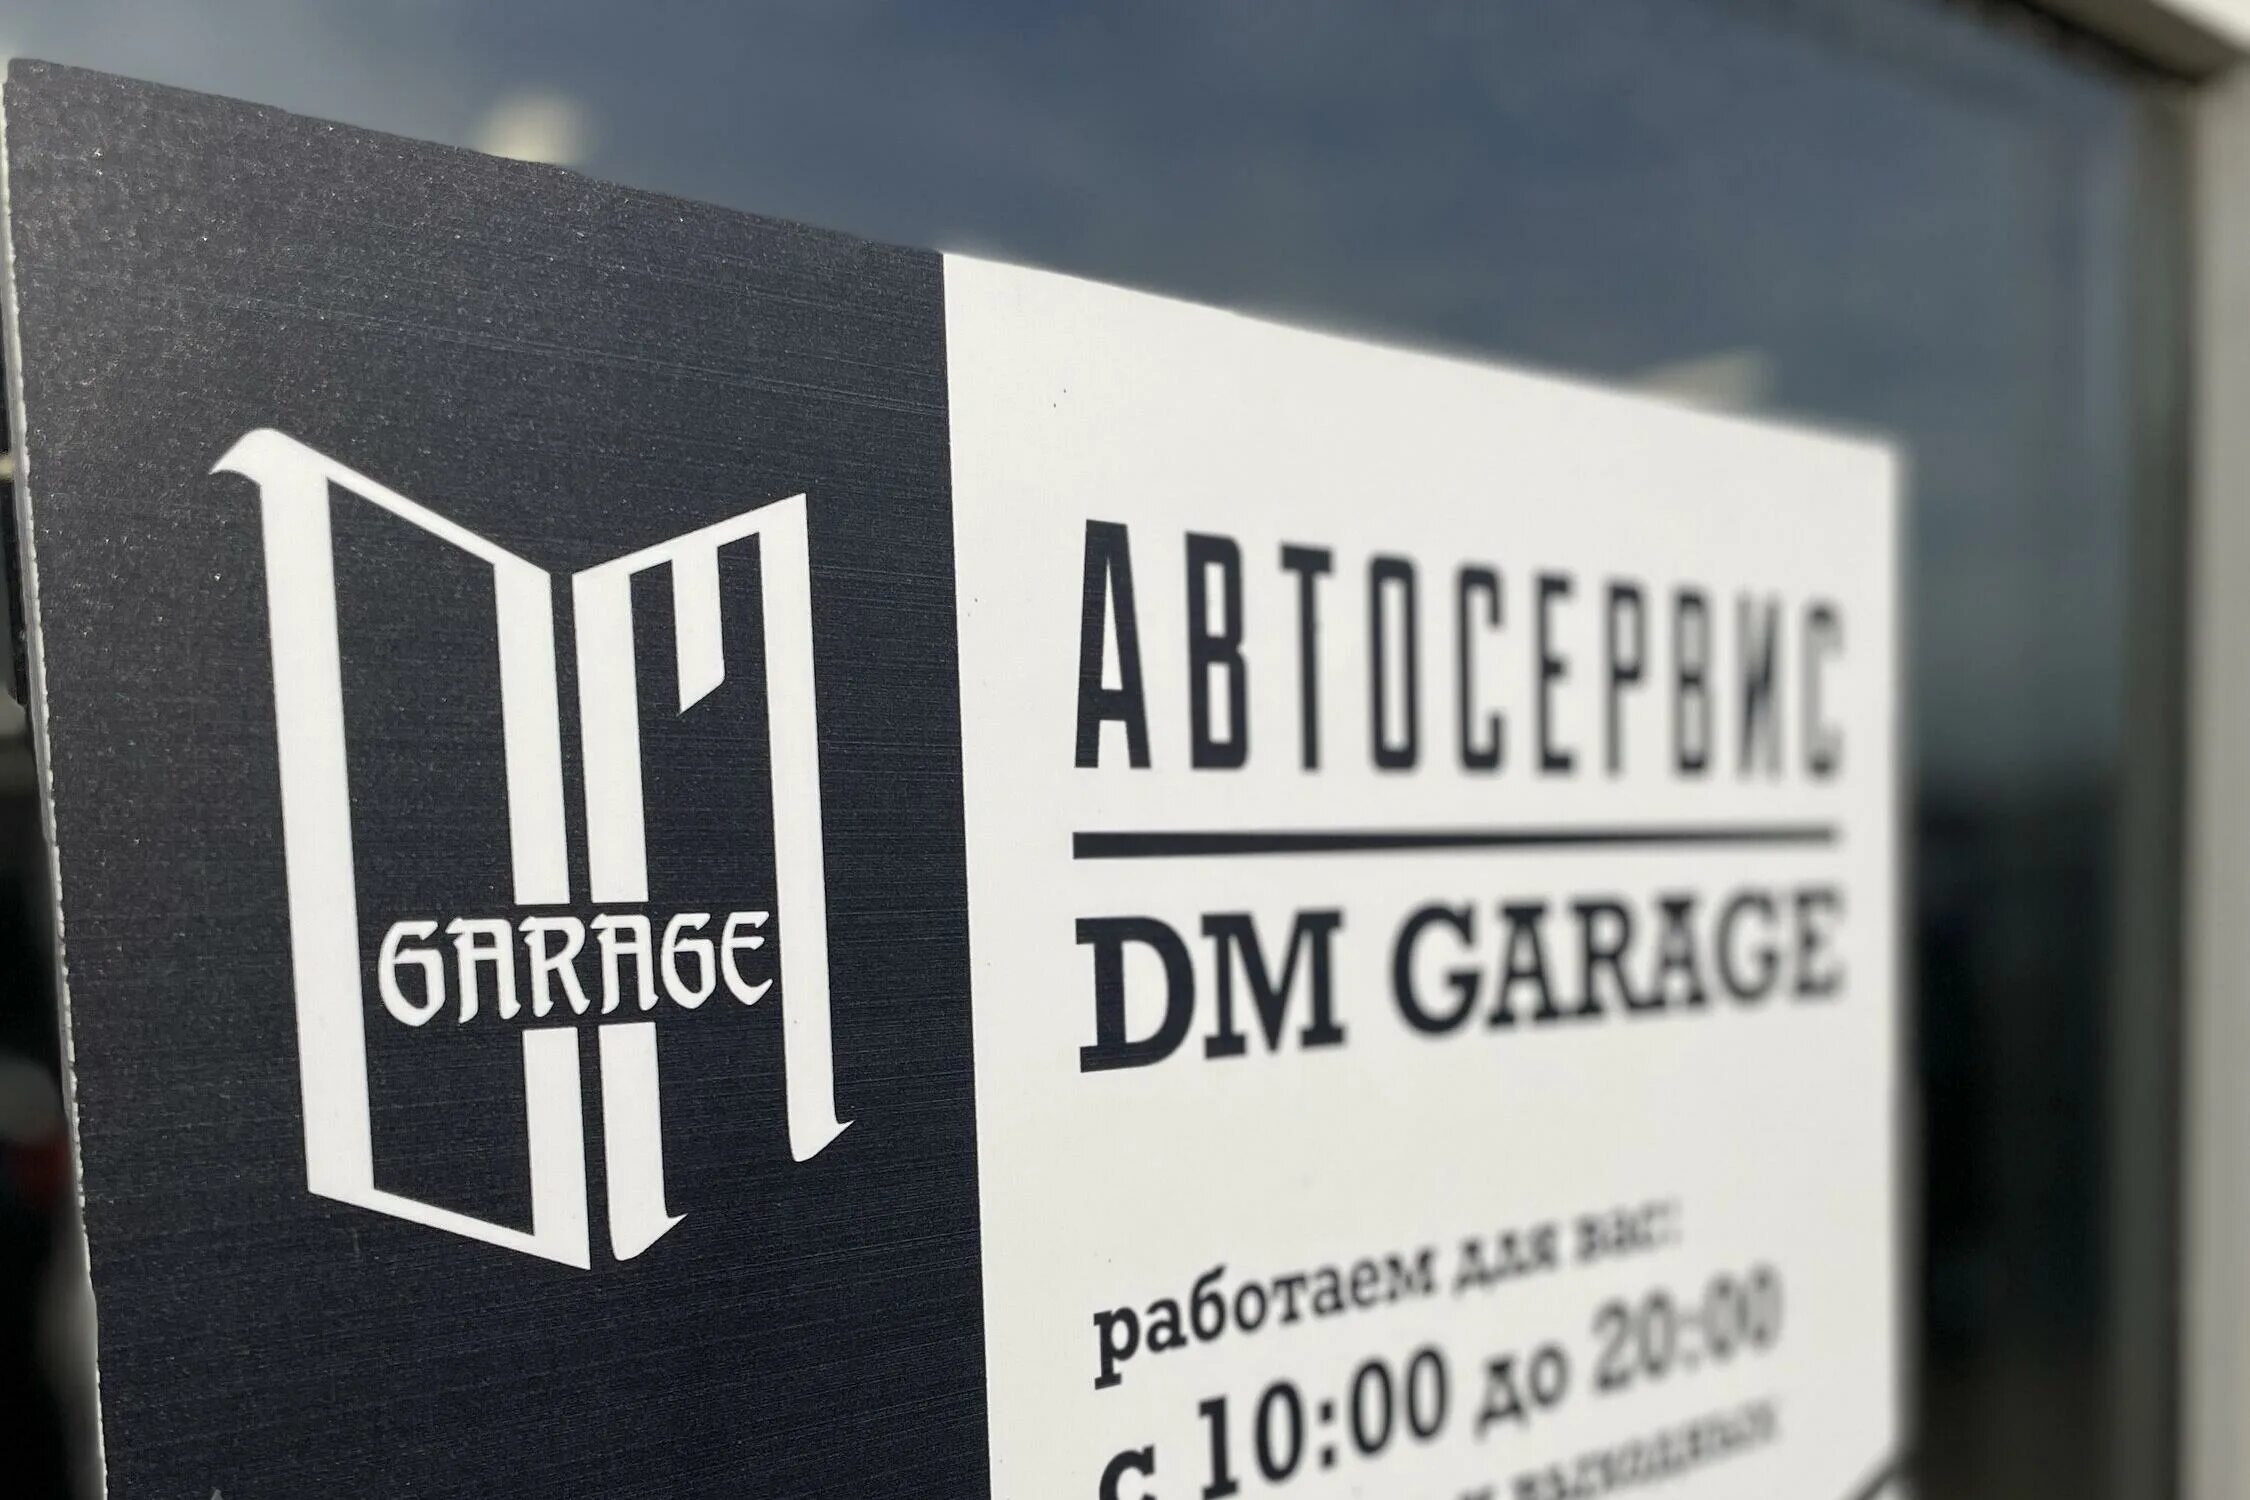 Автосервис DM service. DM service. DM Garage.